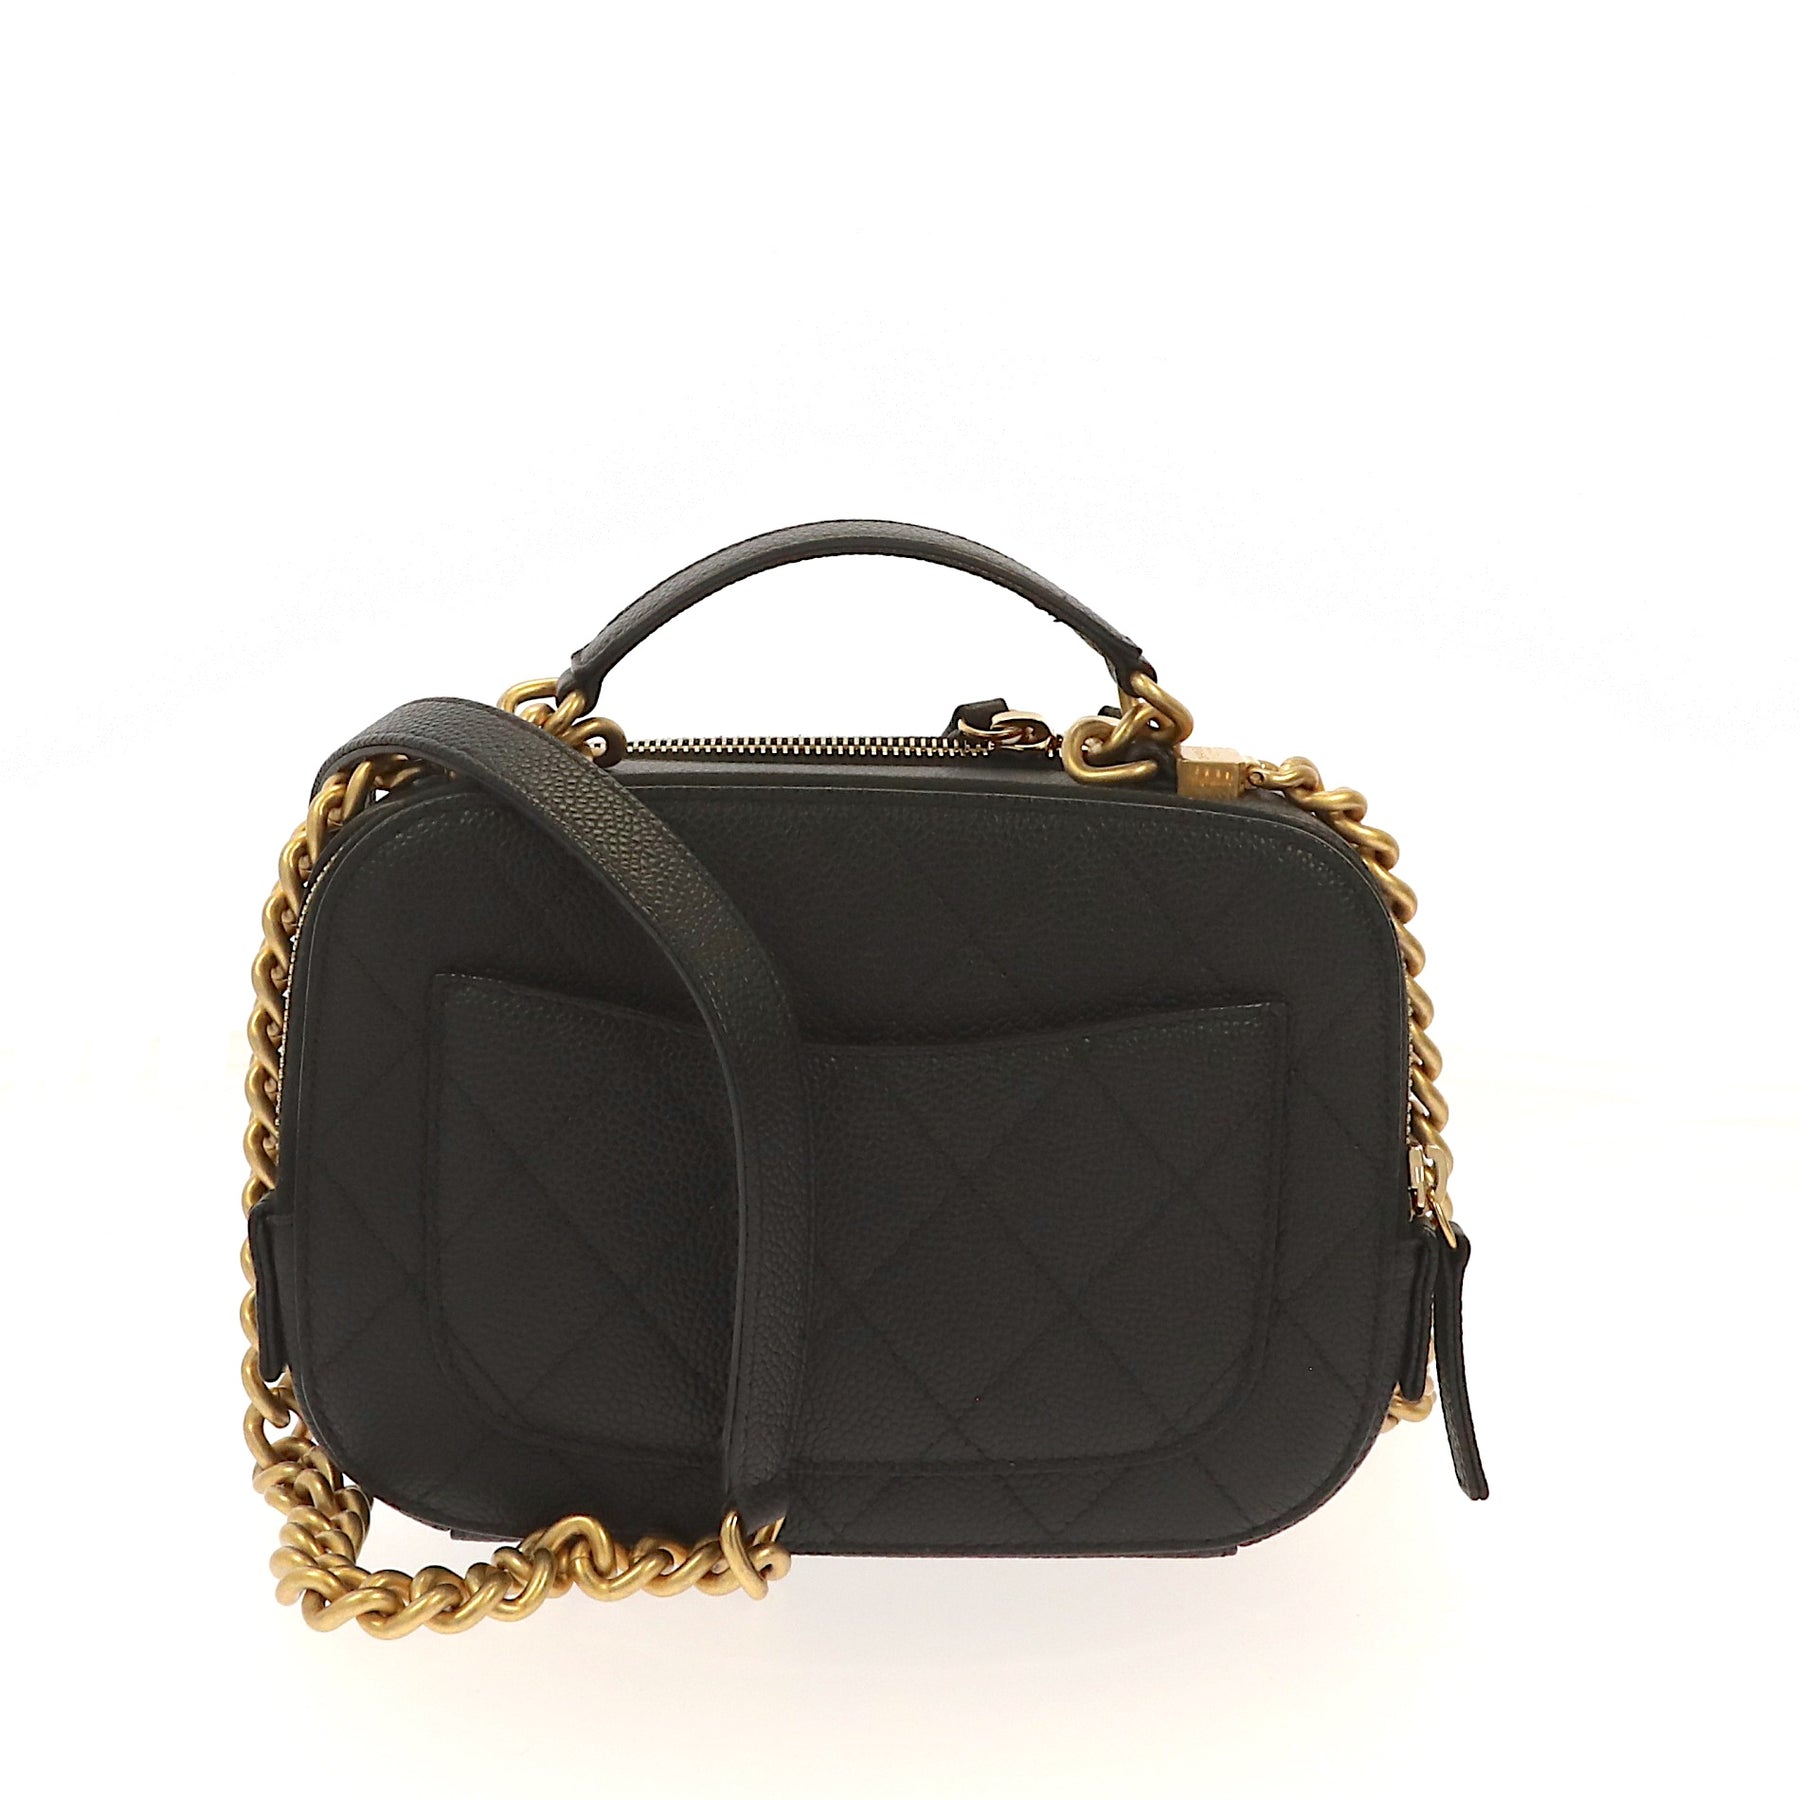 Chanel Mademoiselle Camera Shoulder Bag in black leather – Fancy Lux